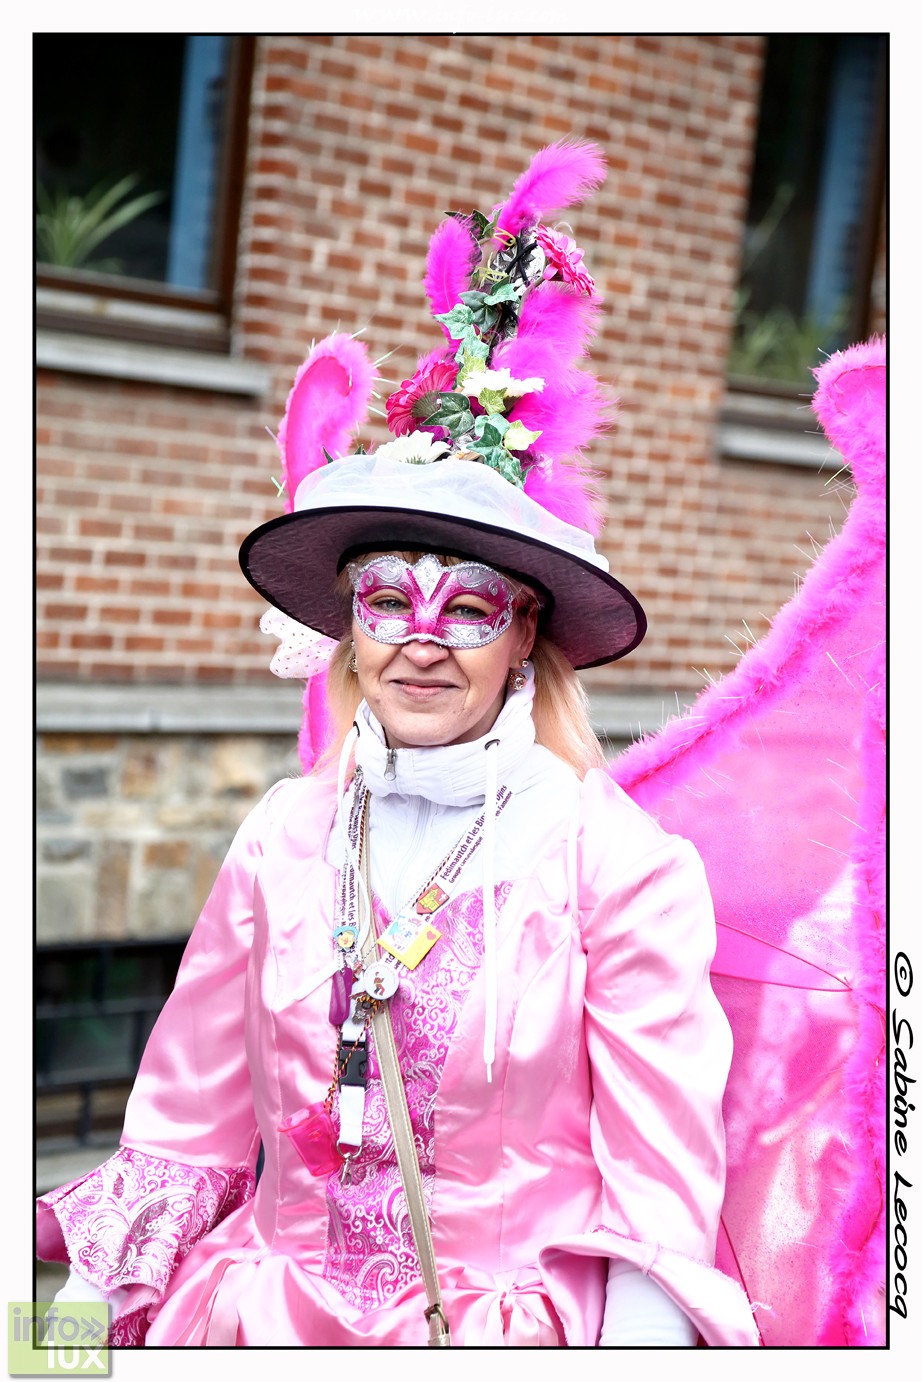 images/stories/PHOTOSREP/La-Roche-en-Ardenne/Carnaval2/Carnaval-larocheb049